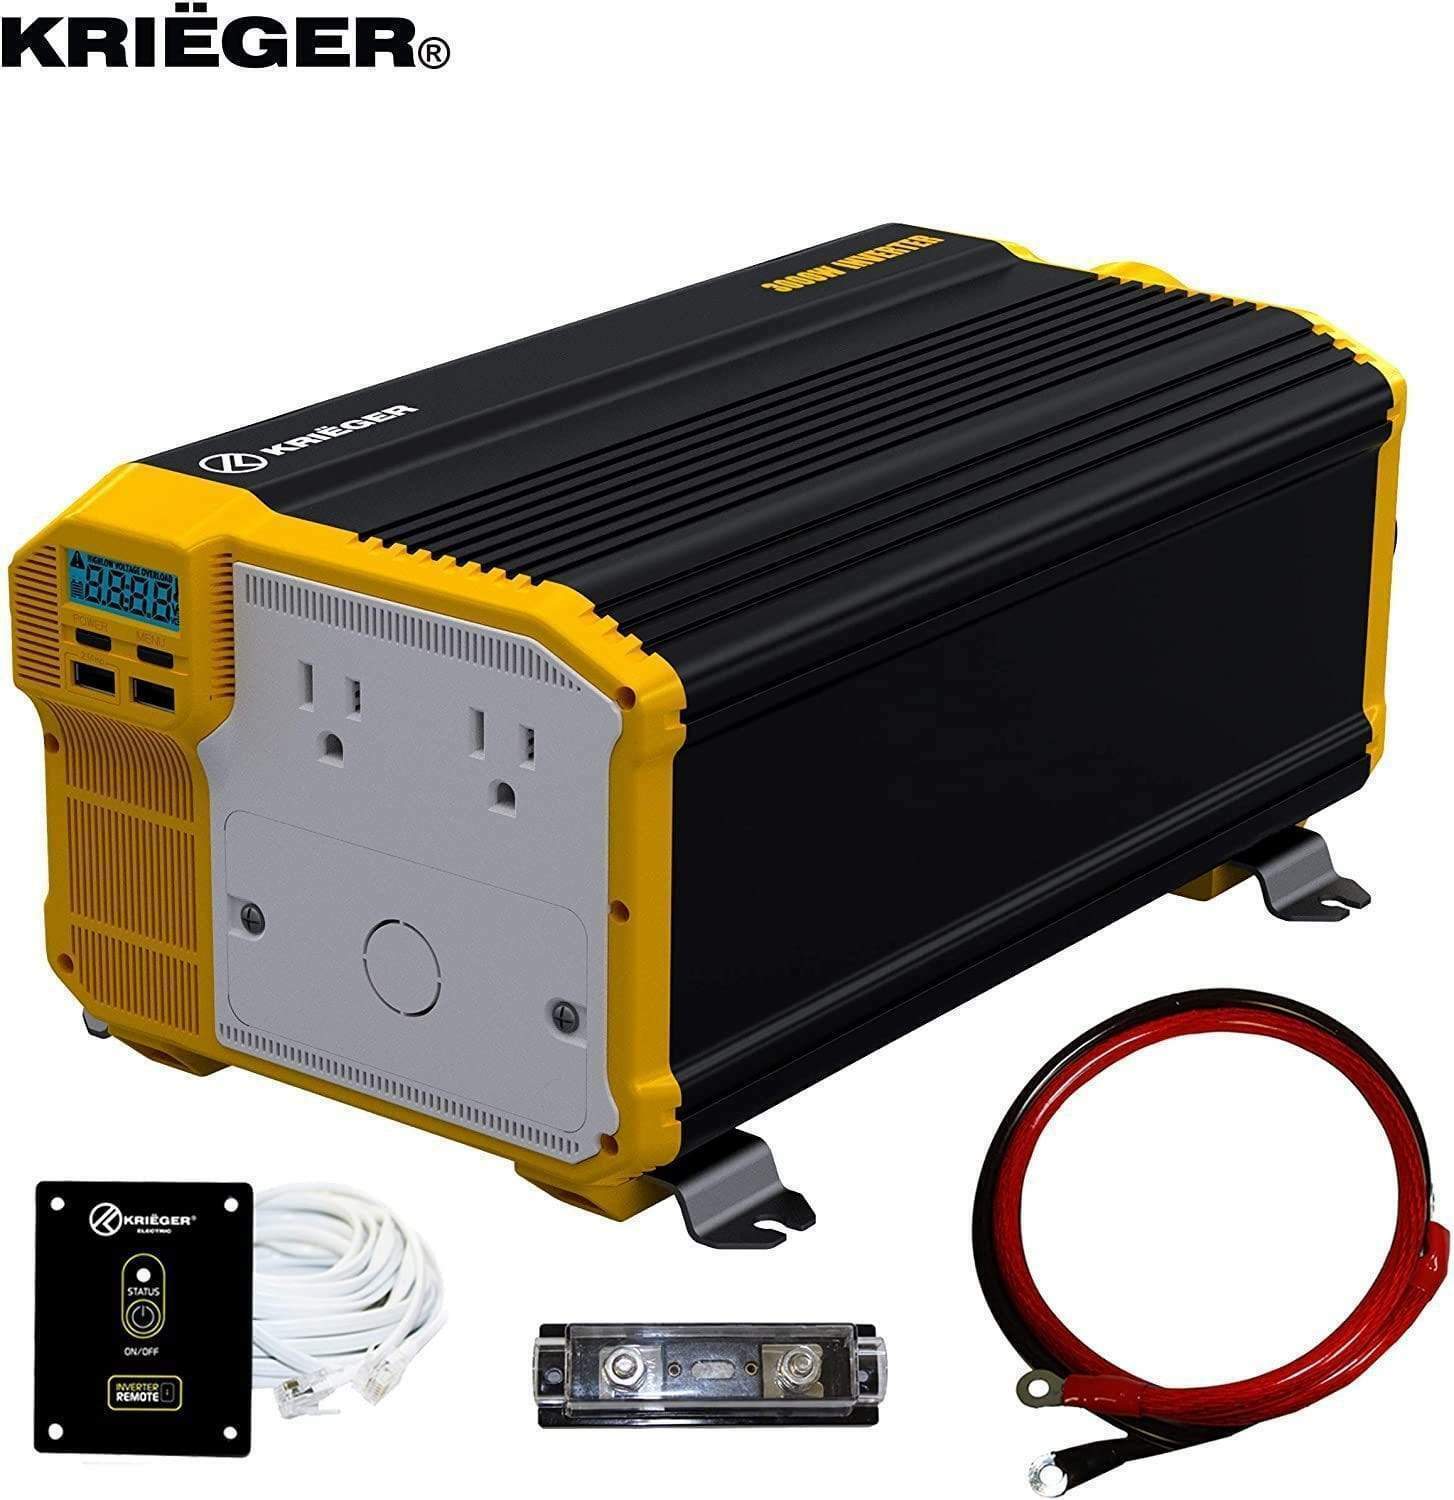 Refurbished KR3000 Krieger 3000 Watts Power Inverter 12V to 